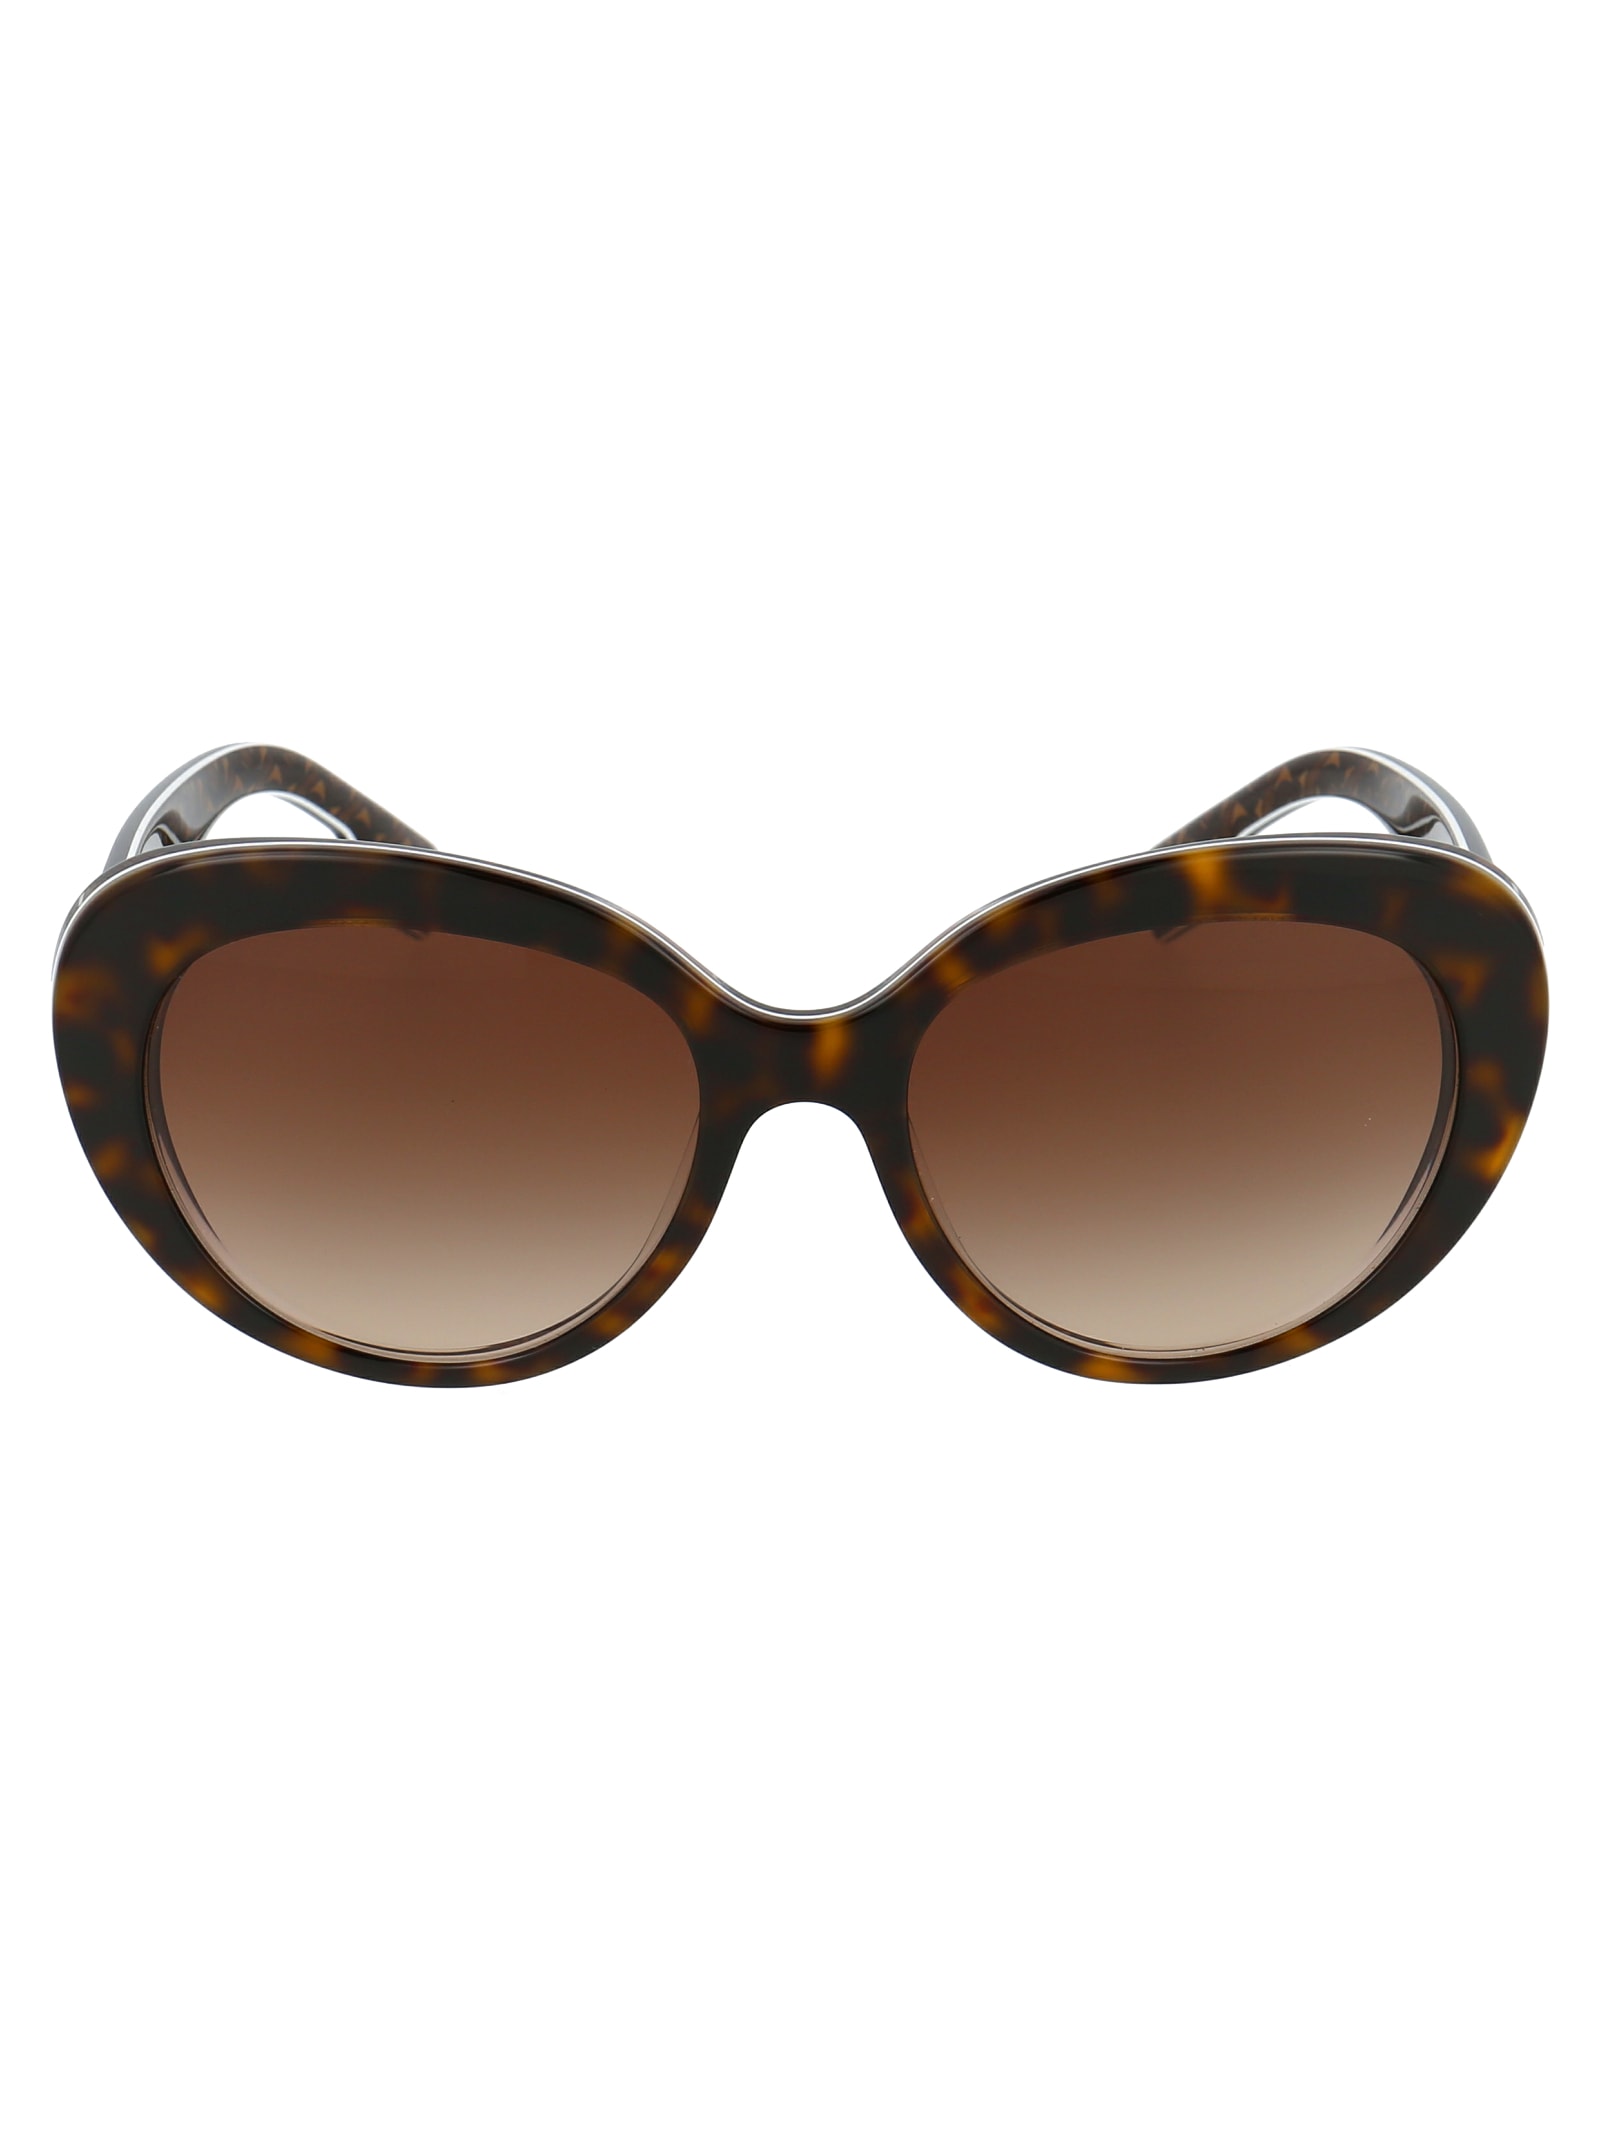 Burberry Sunglasses In Top Dark Havana On Tb Brown